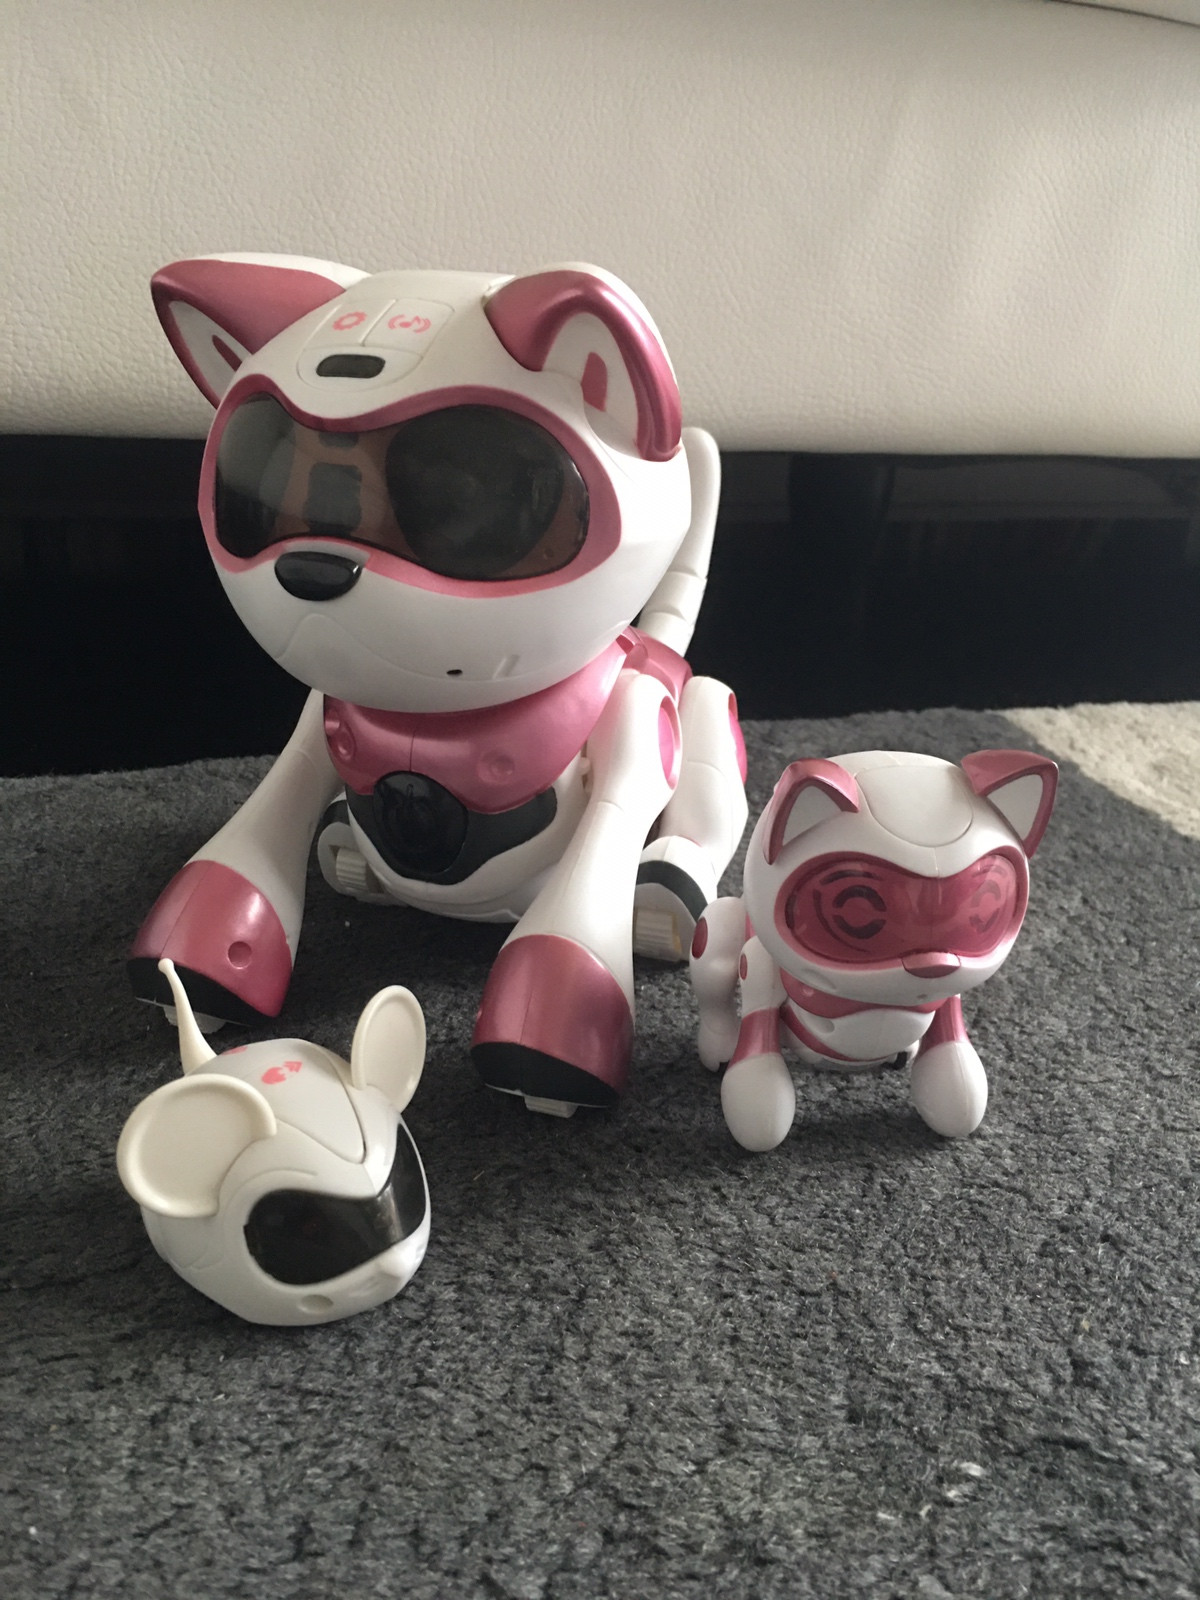 Robot Chat Splash Toys TEKSTA Kitty rose - BestofRobots